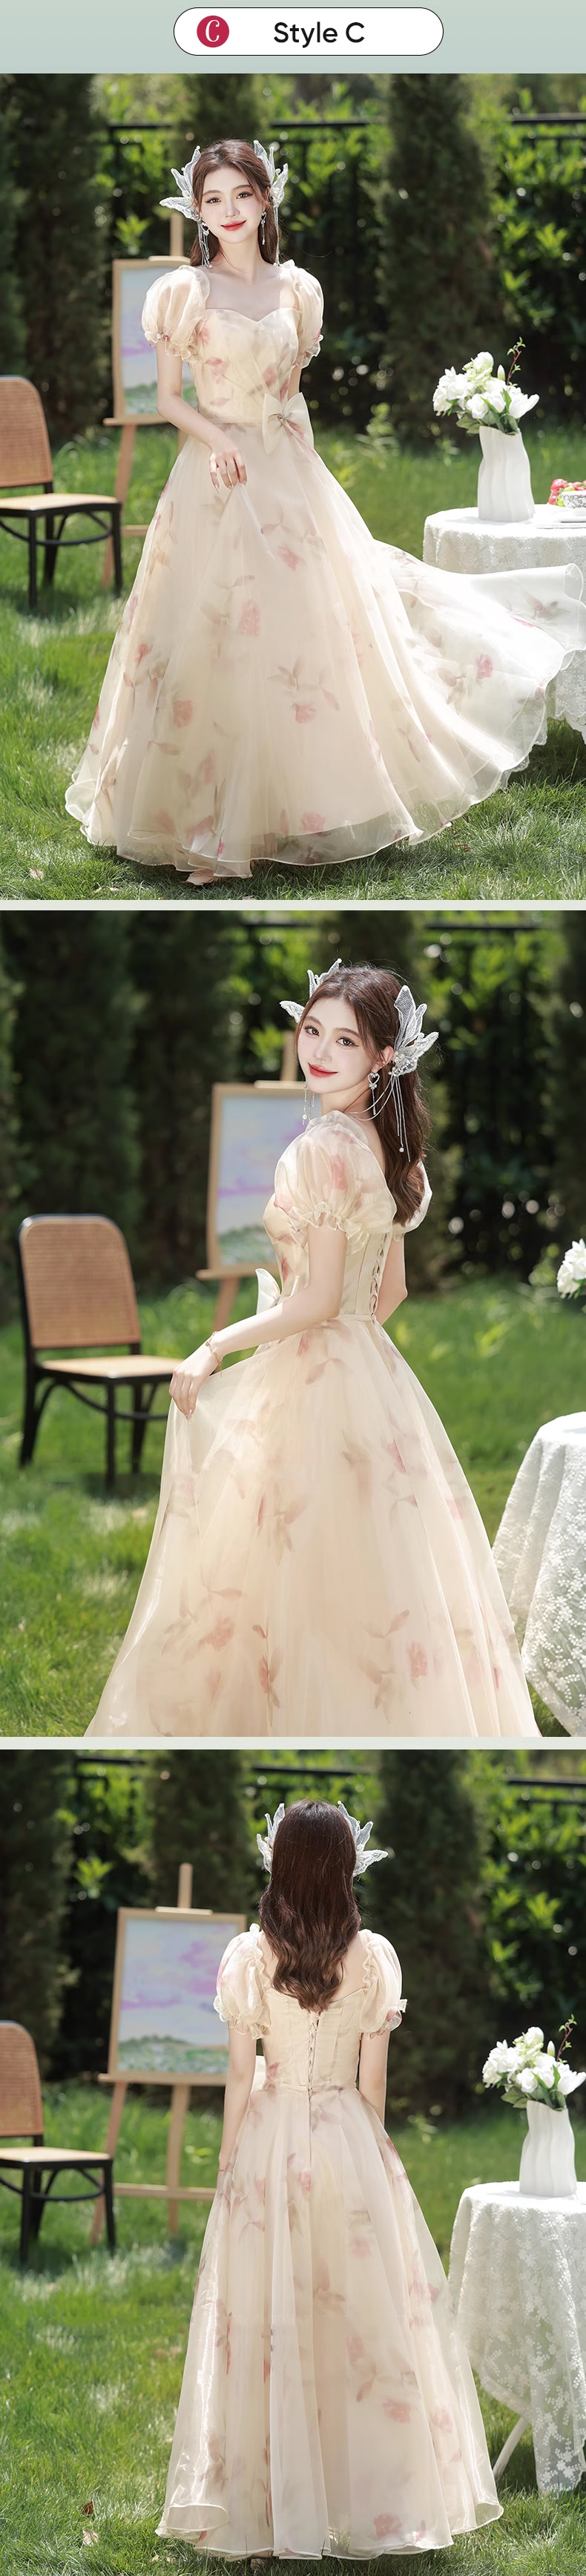 Sweet-Short-Sleeve-Floral-Summer-Bridesmaid-Wedding-Guest-Dress19